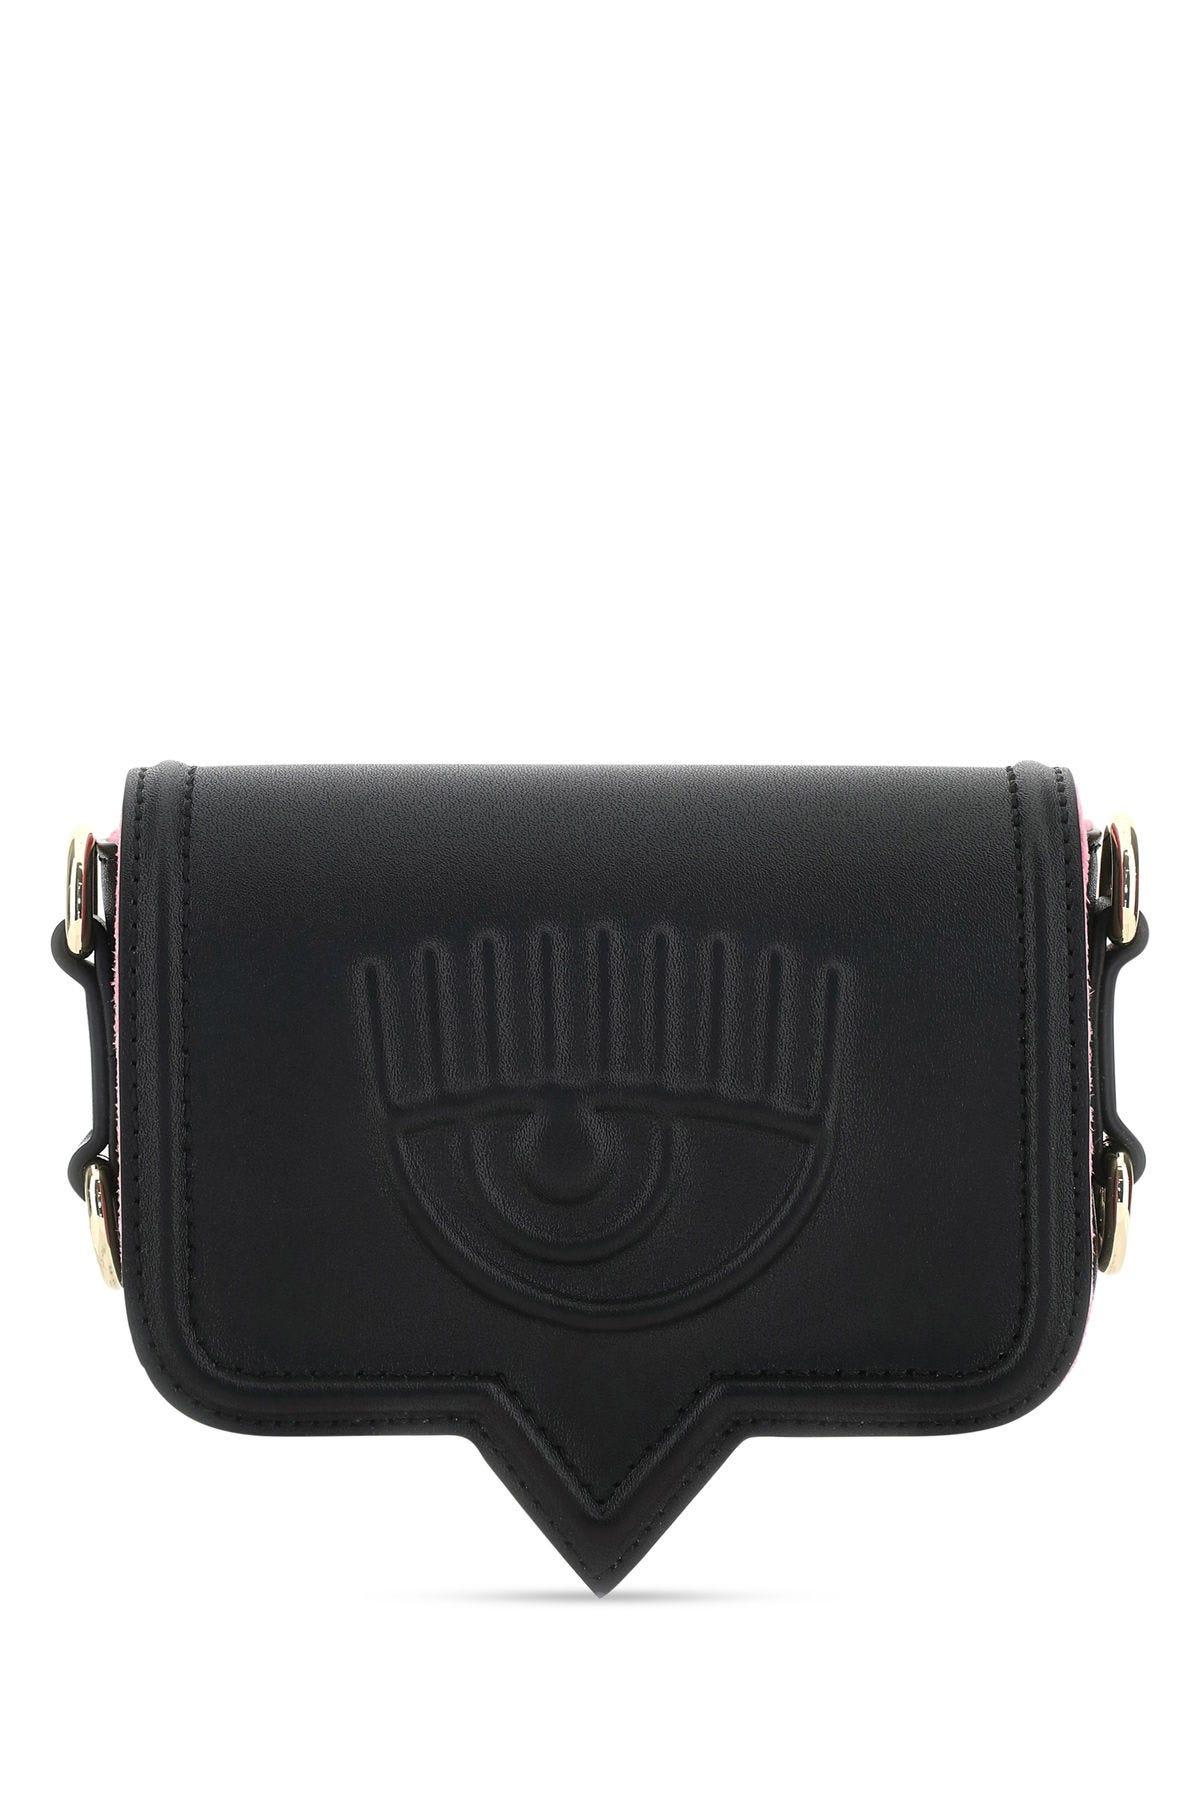 Chiara Ferragni Black Synthetic Leather Mini Eyelike Crossbody Bag